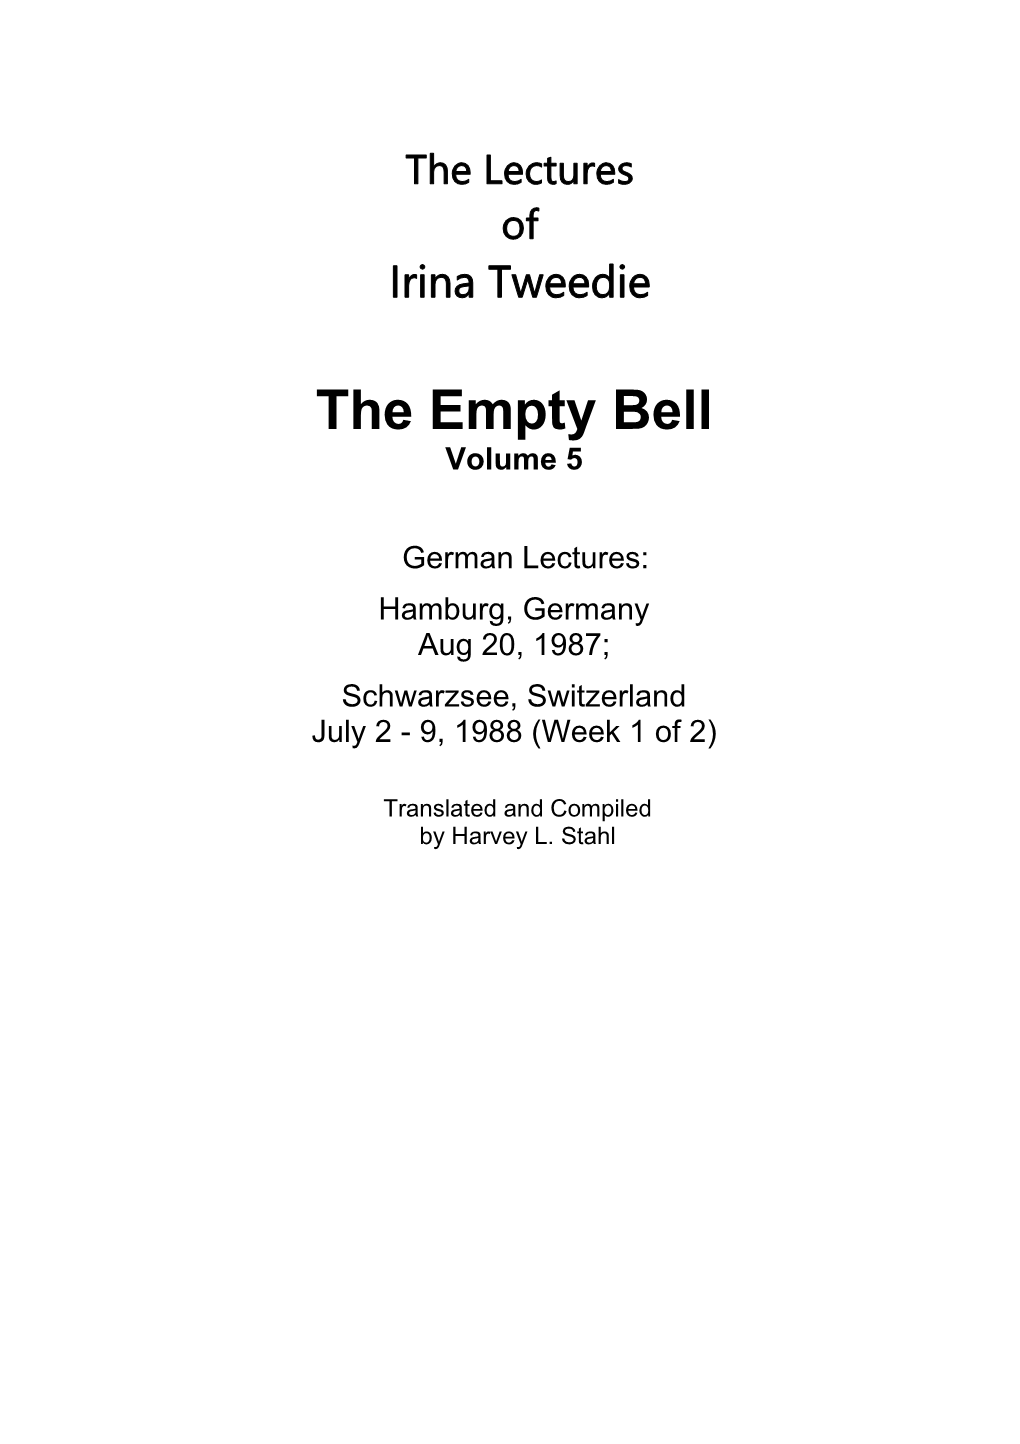 The Empty Bell Volume 5